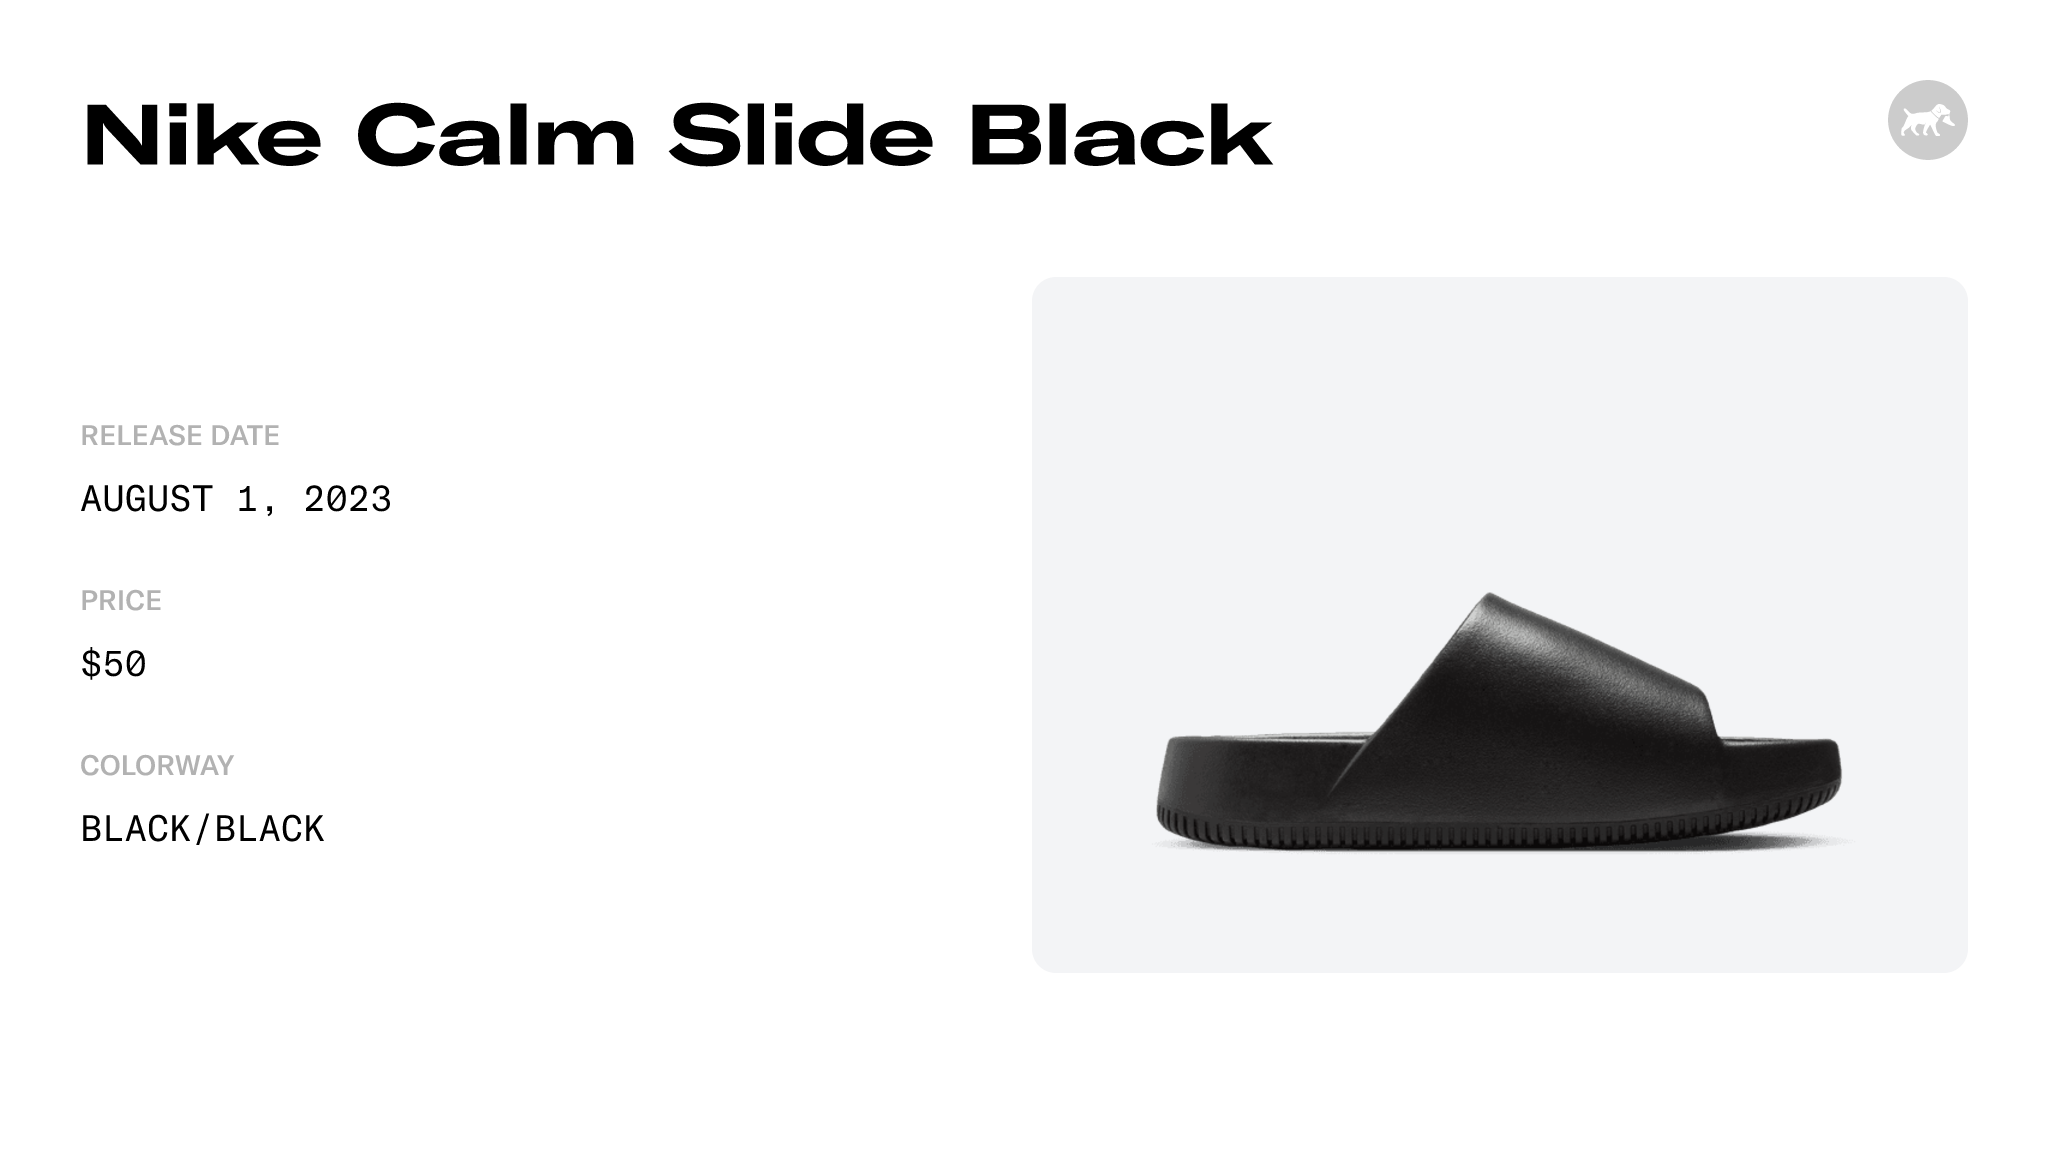 Where To Buy The Nike Calm Slide 2023